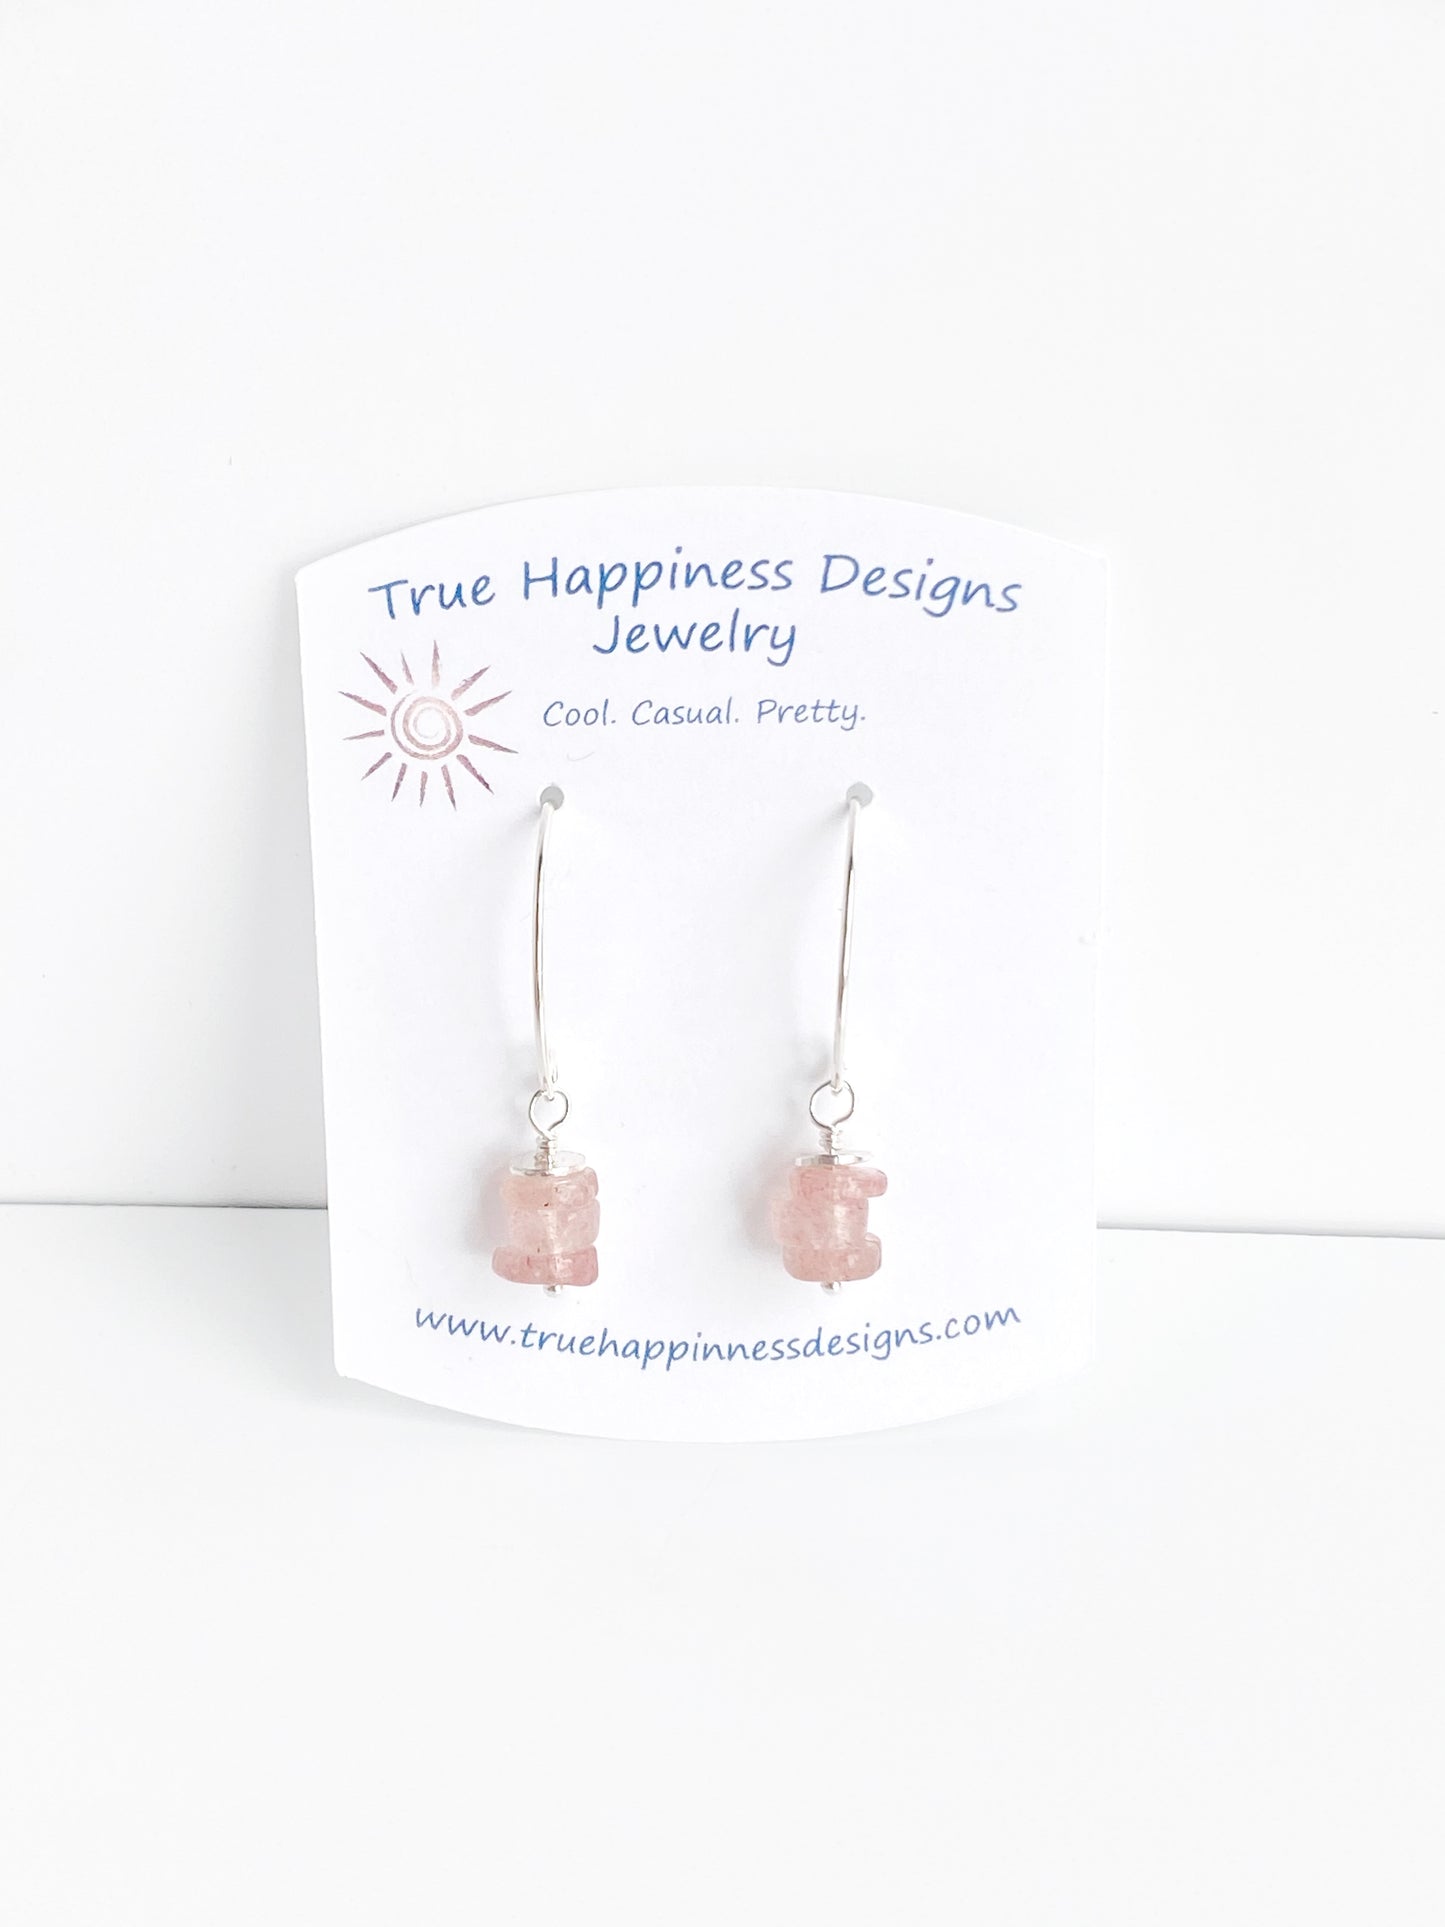 handmade strawberry quartz earrings hung on a true happiness designs earring card.